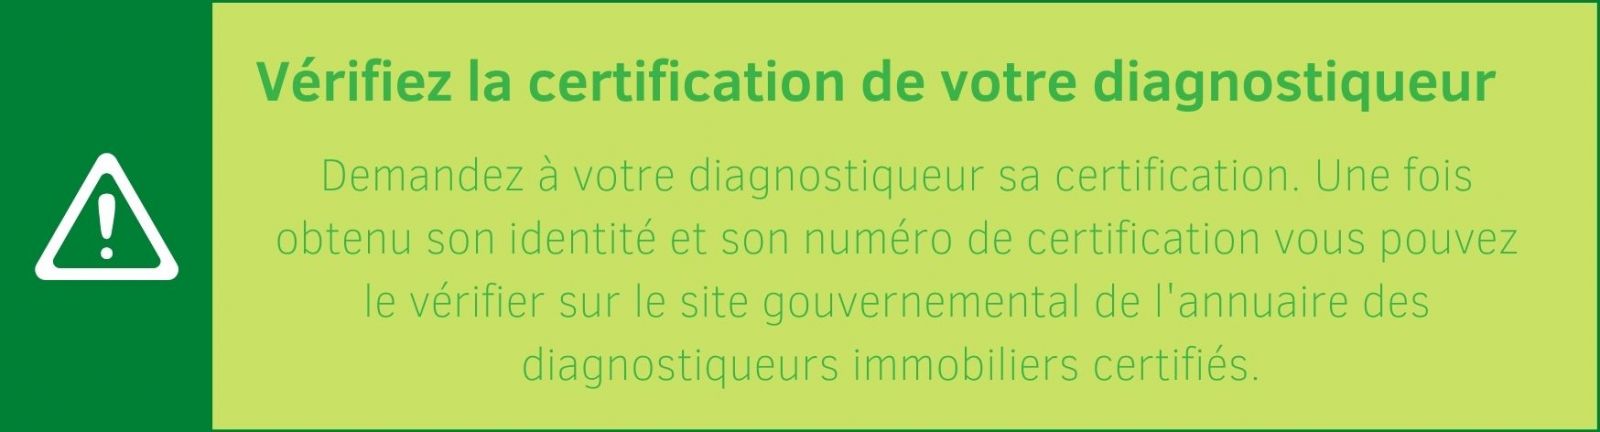 Verification certification